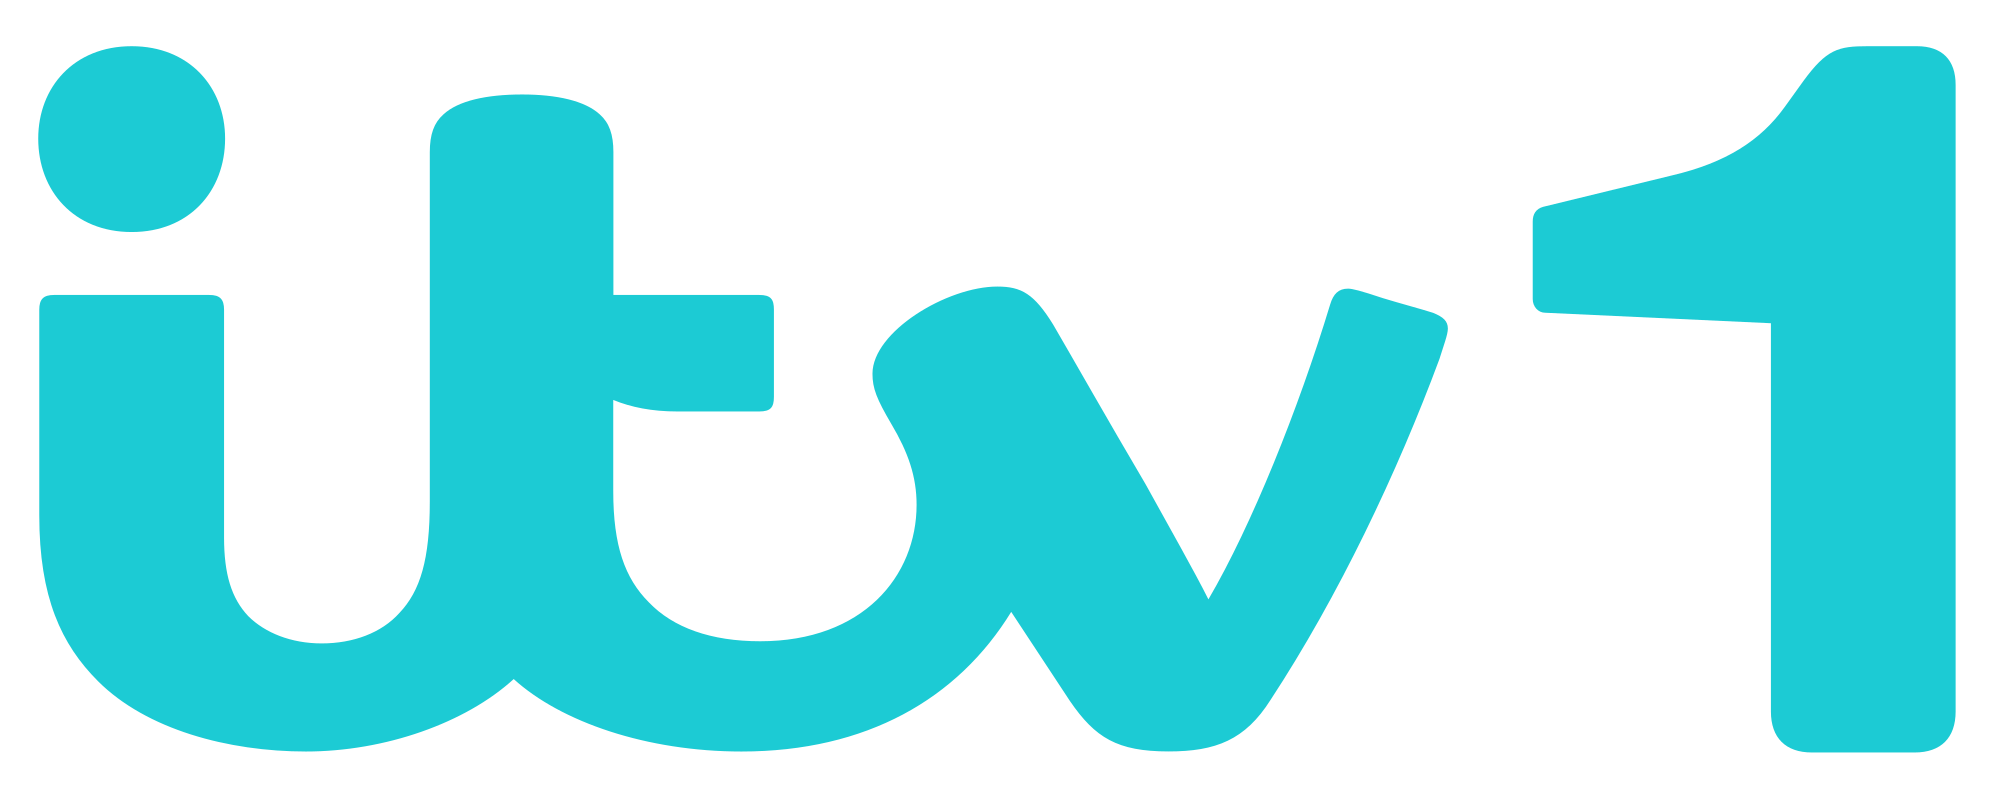 ITV1 - network